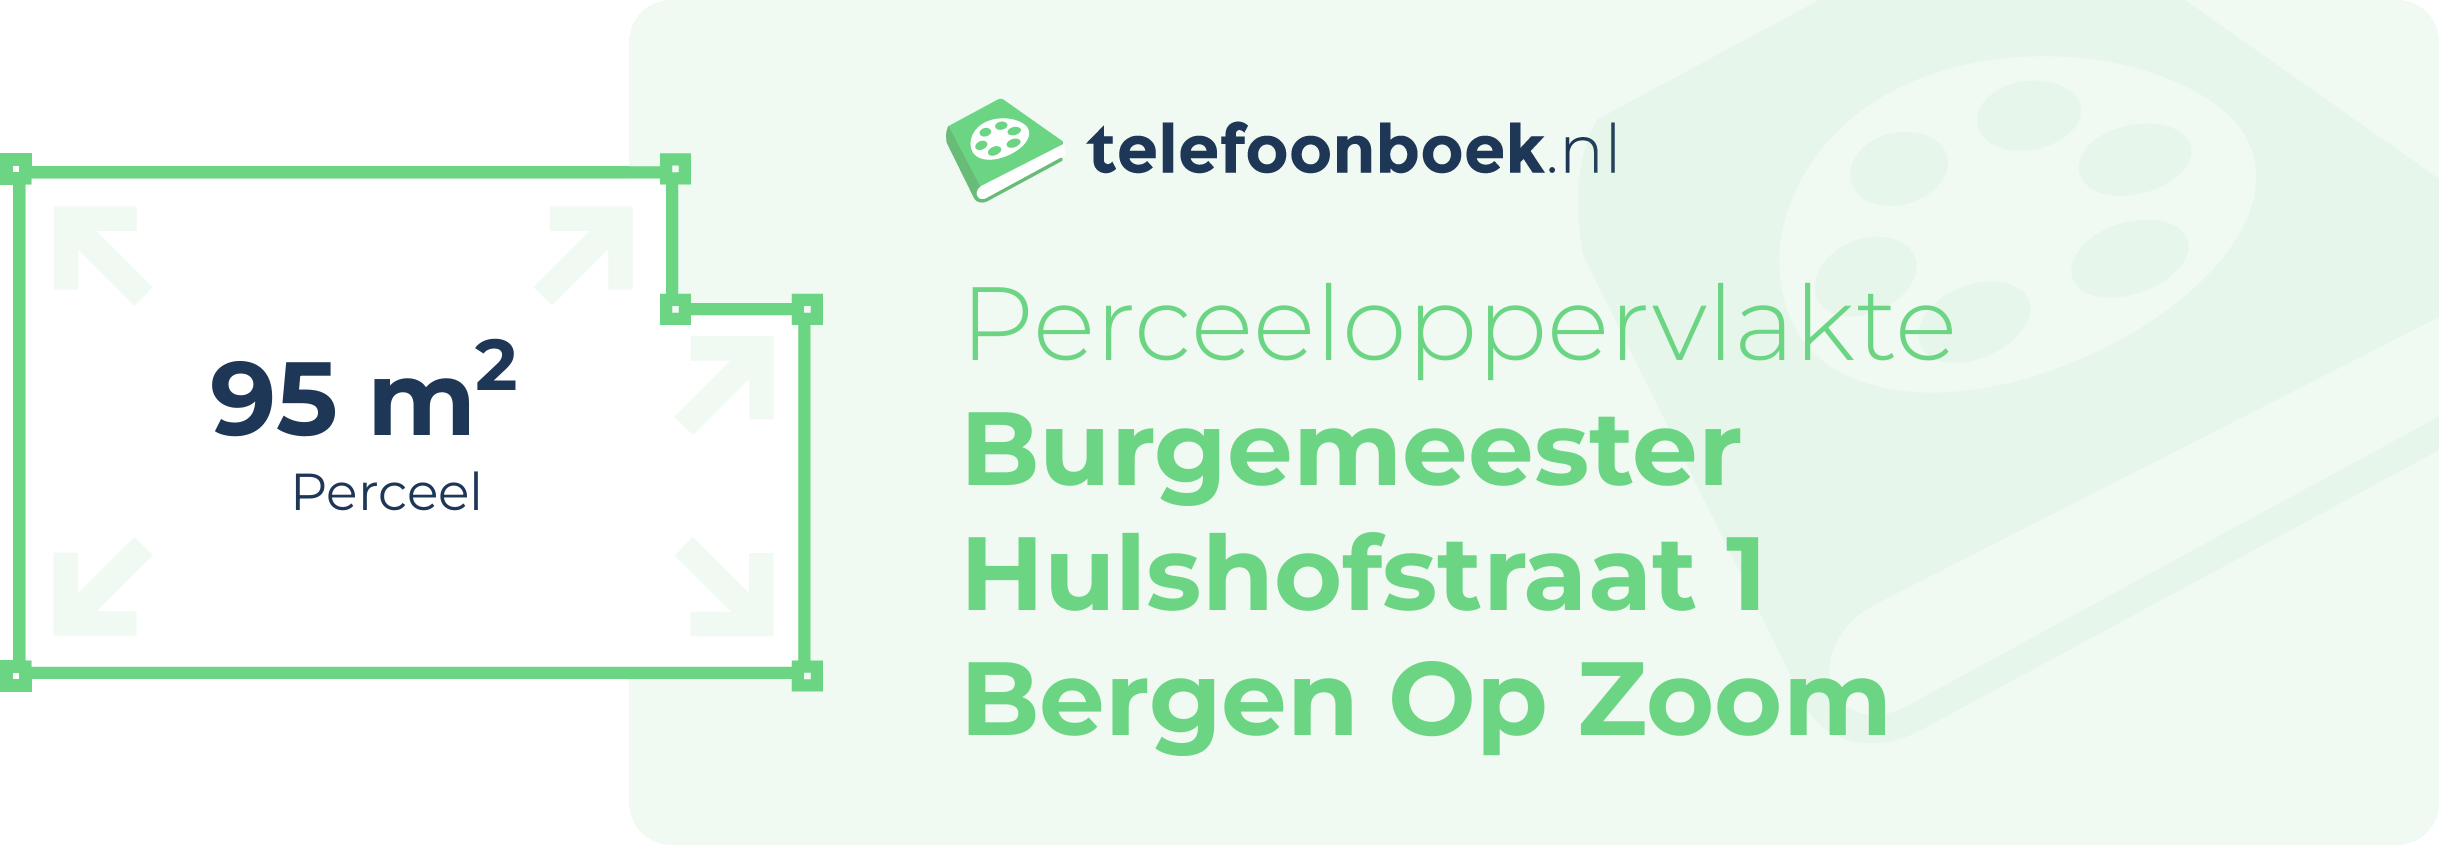 Perceeloppervlakte Burgemeester Hulshofstraat 1 Bergen Op Zoom